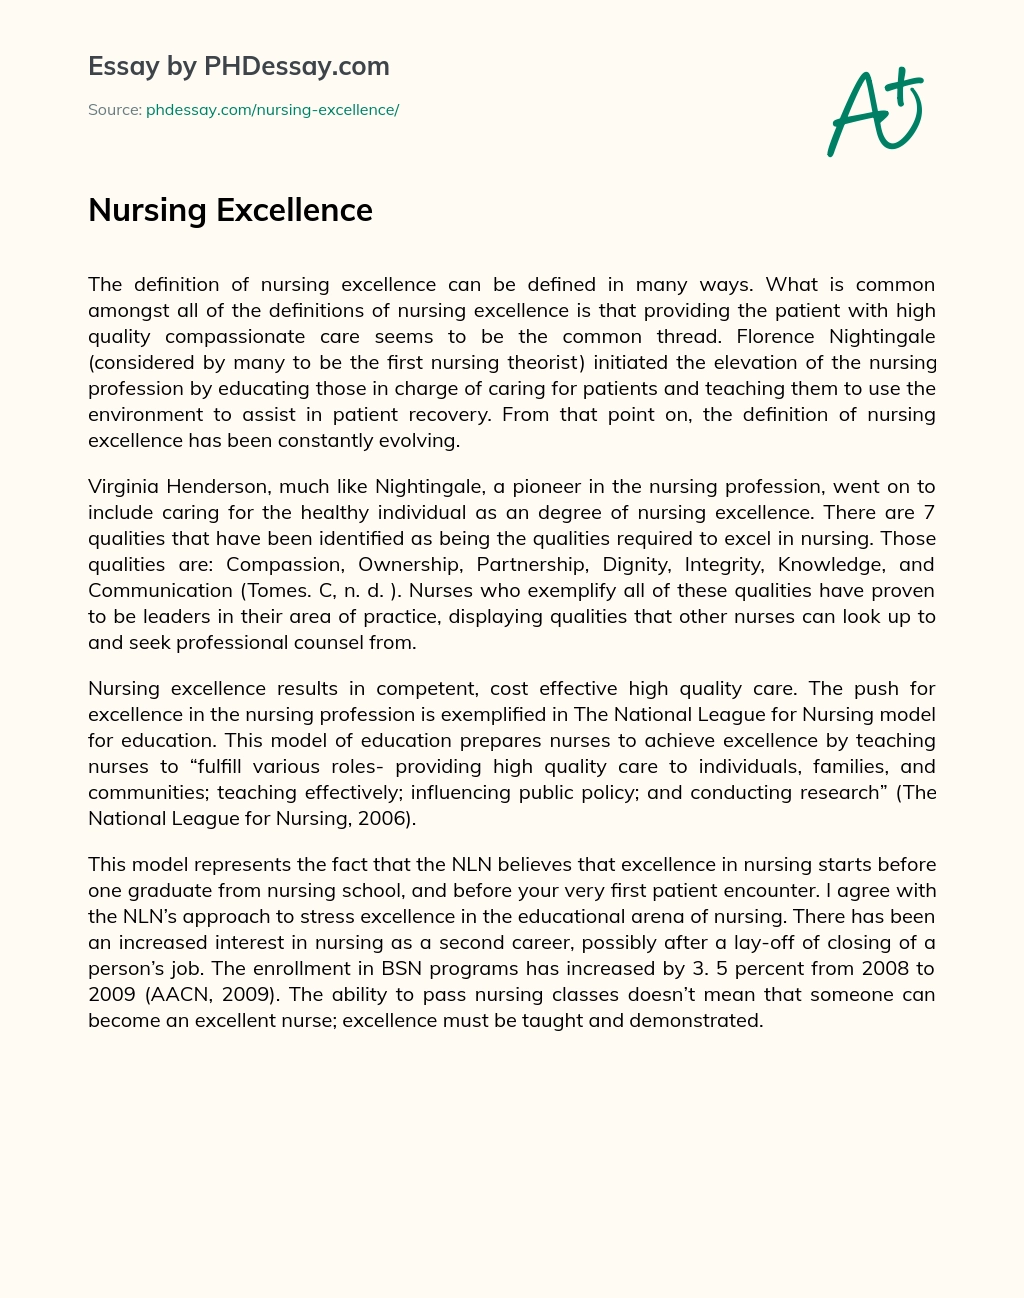 Nursing Excellence essay